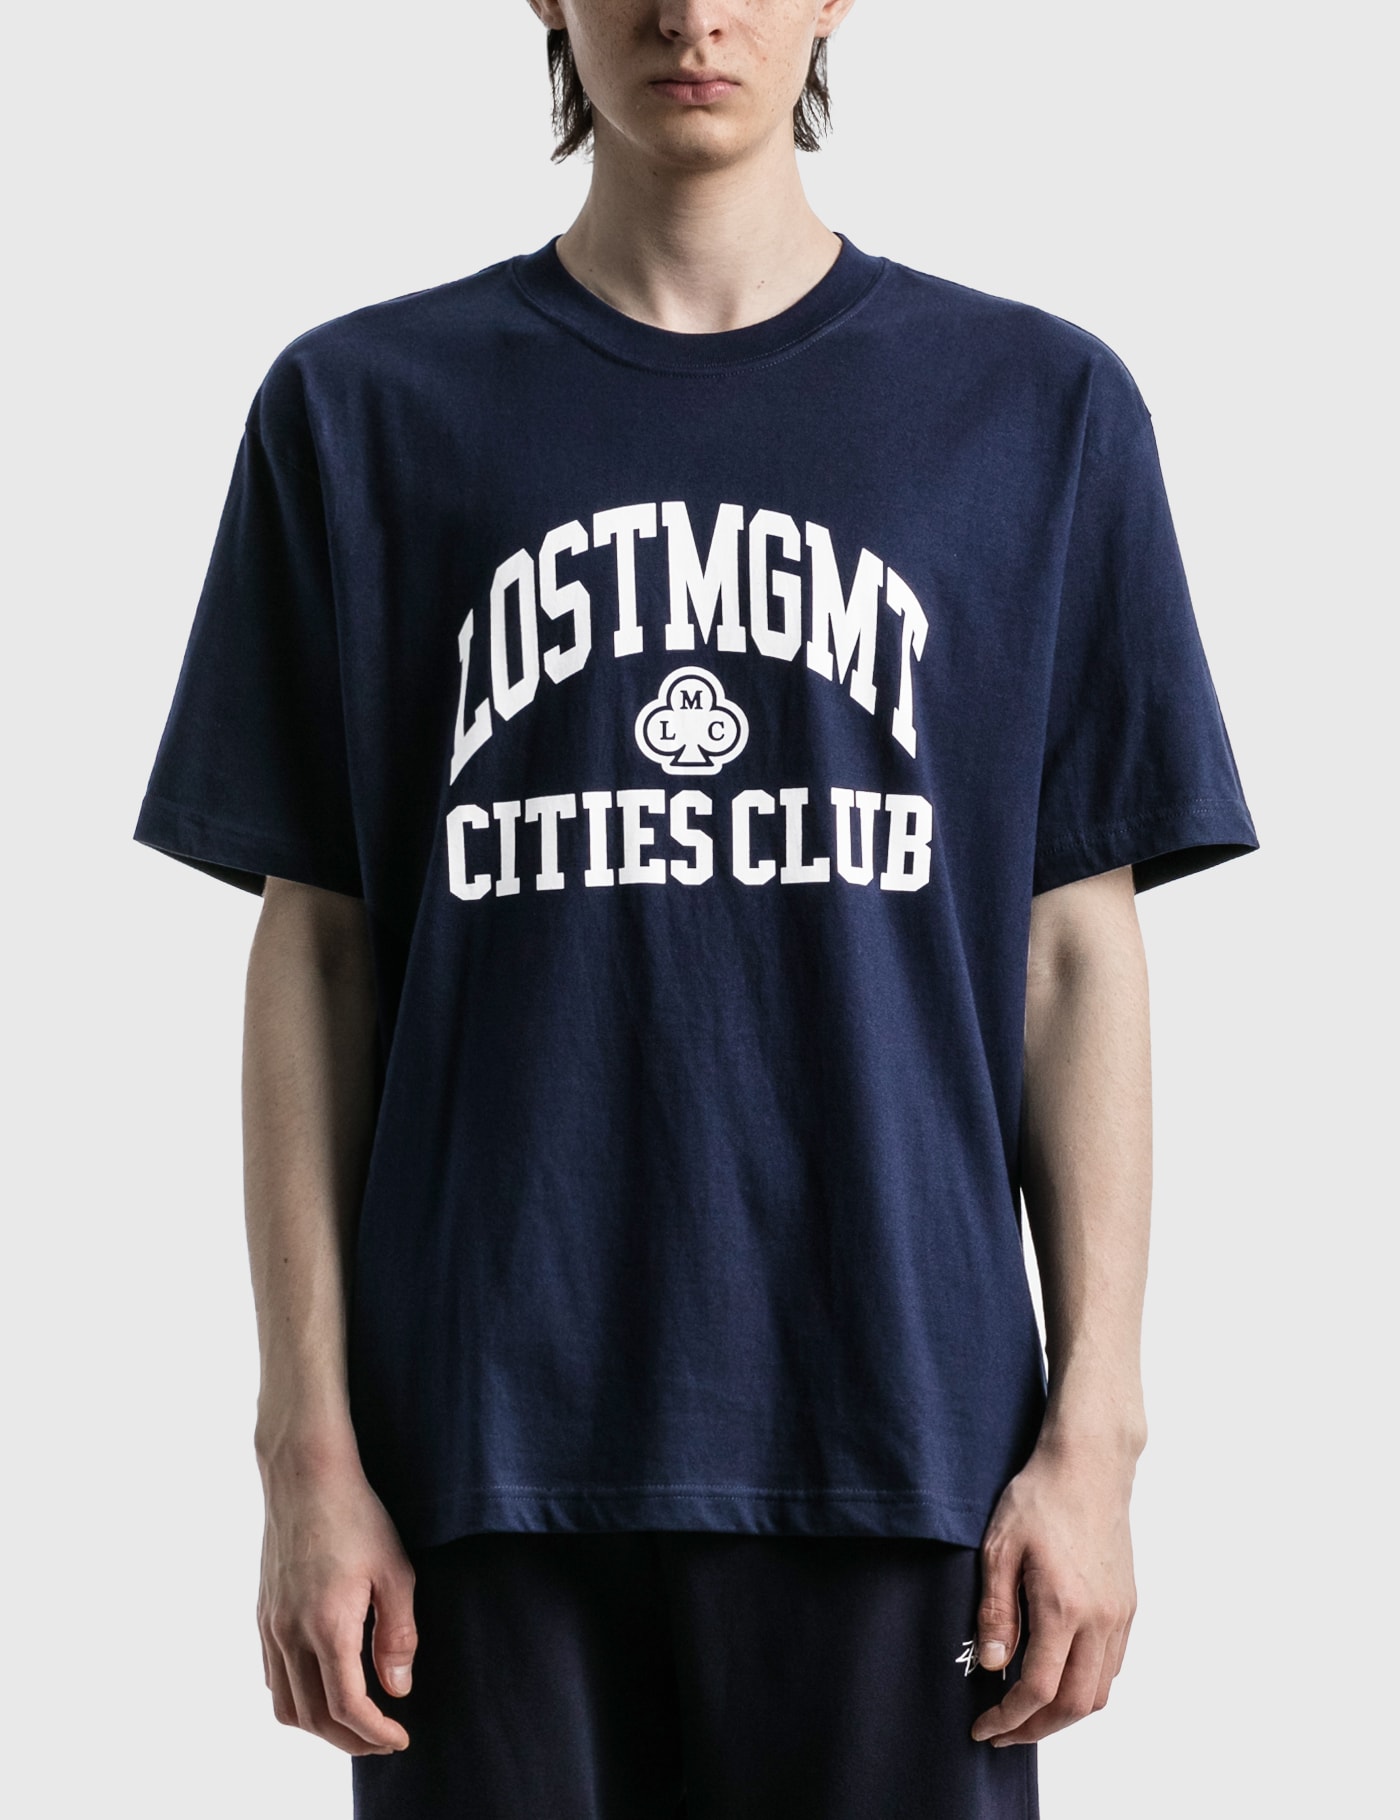 LMC - LMC Club Athletic T-shirt | HBX